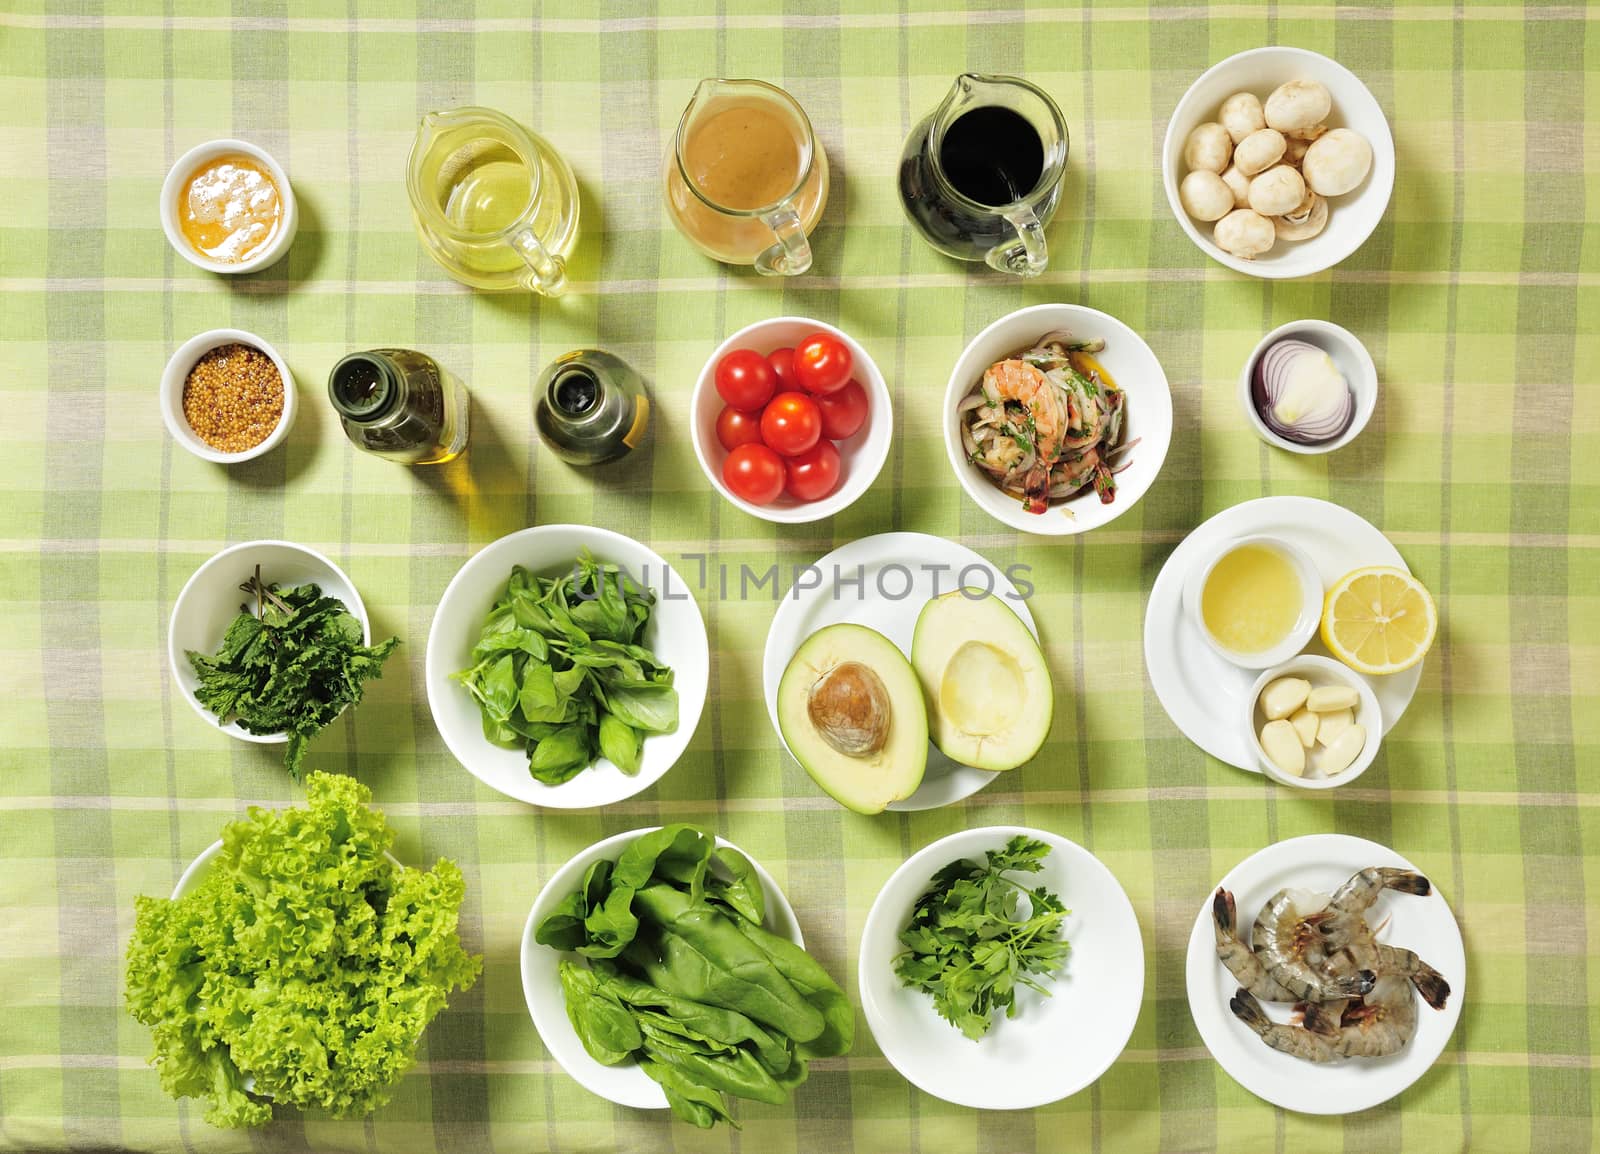 Ingredients for salad